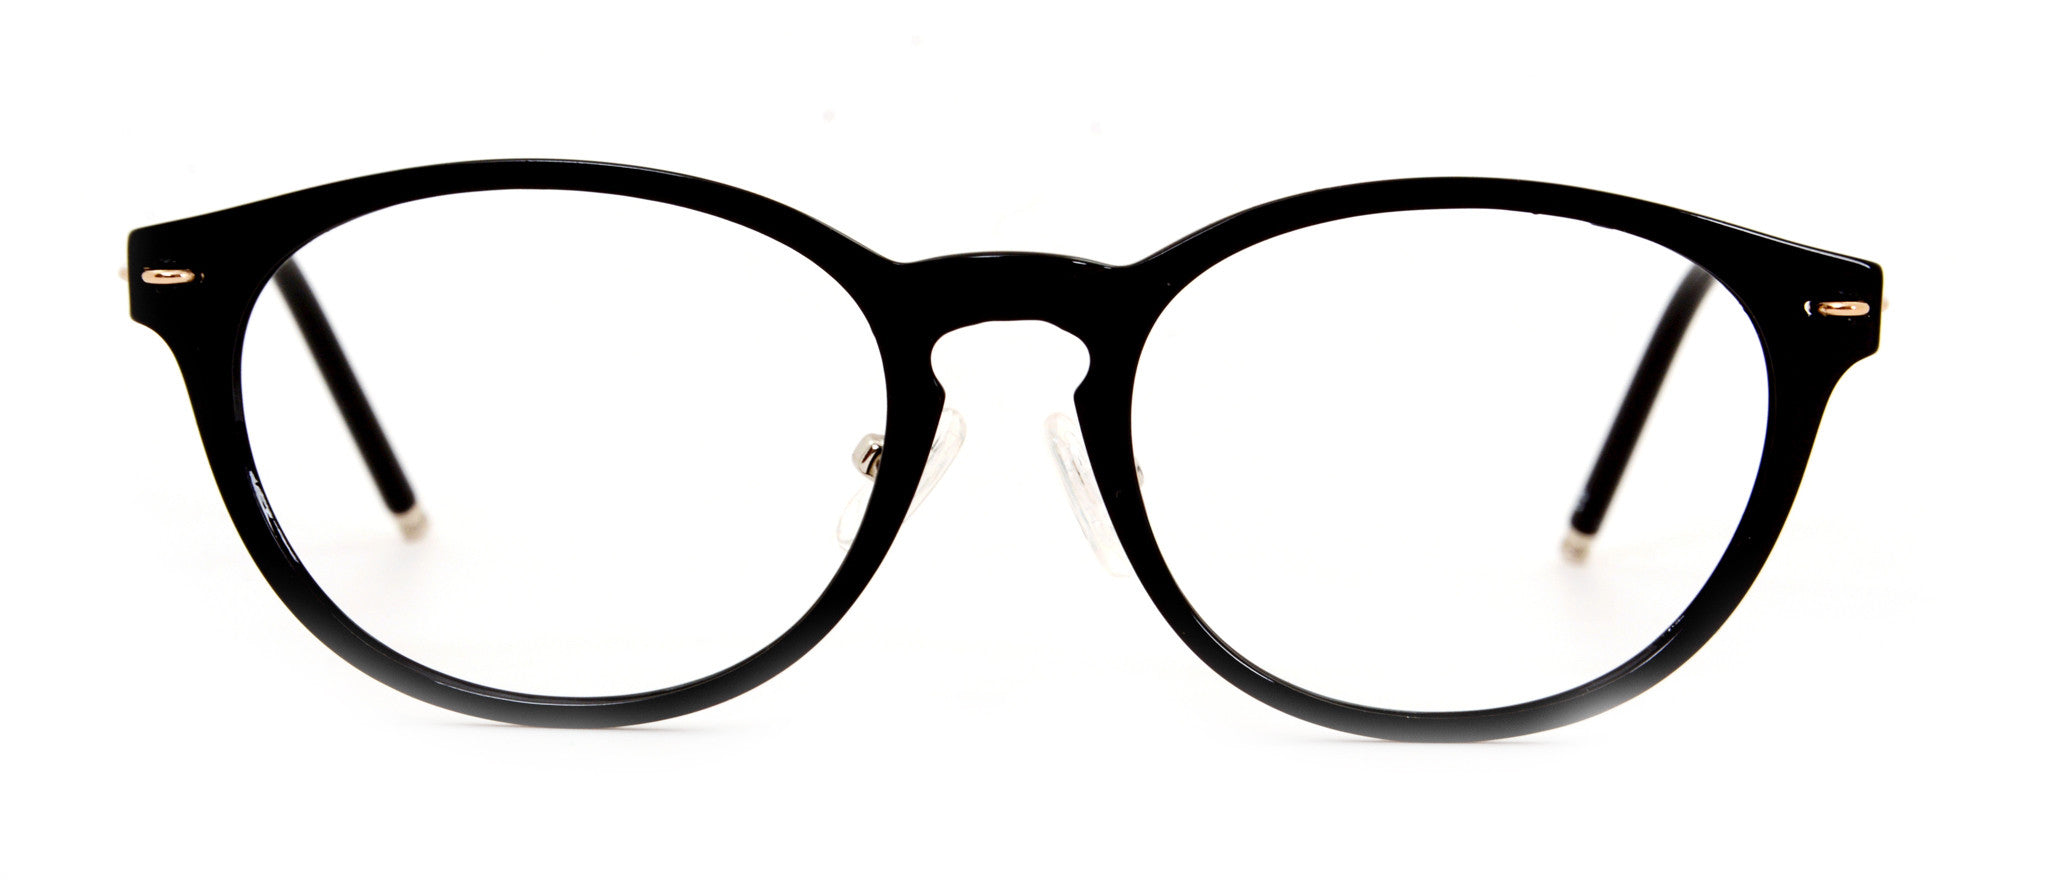 Round Glasses Frames | Circle Eyeglasses Sunglasses & Prescription